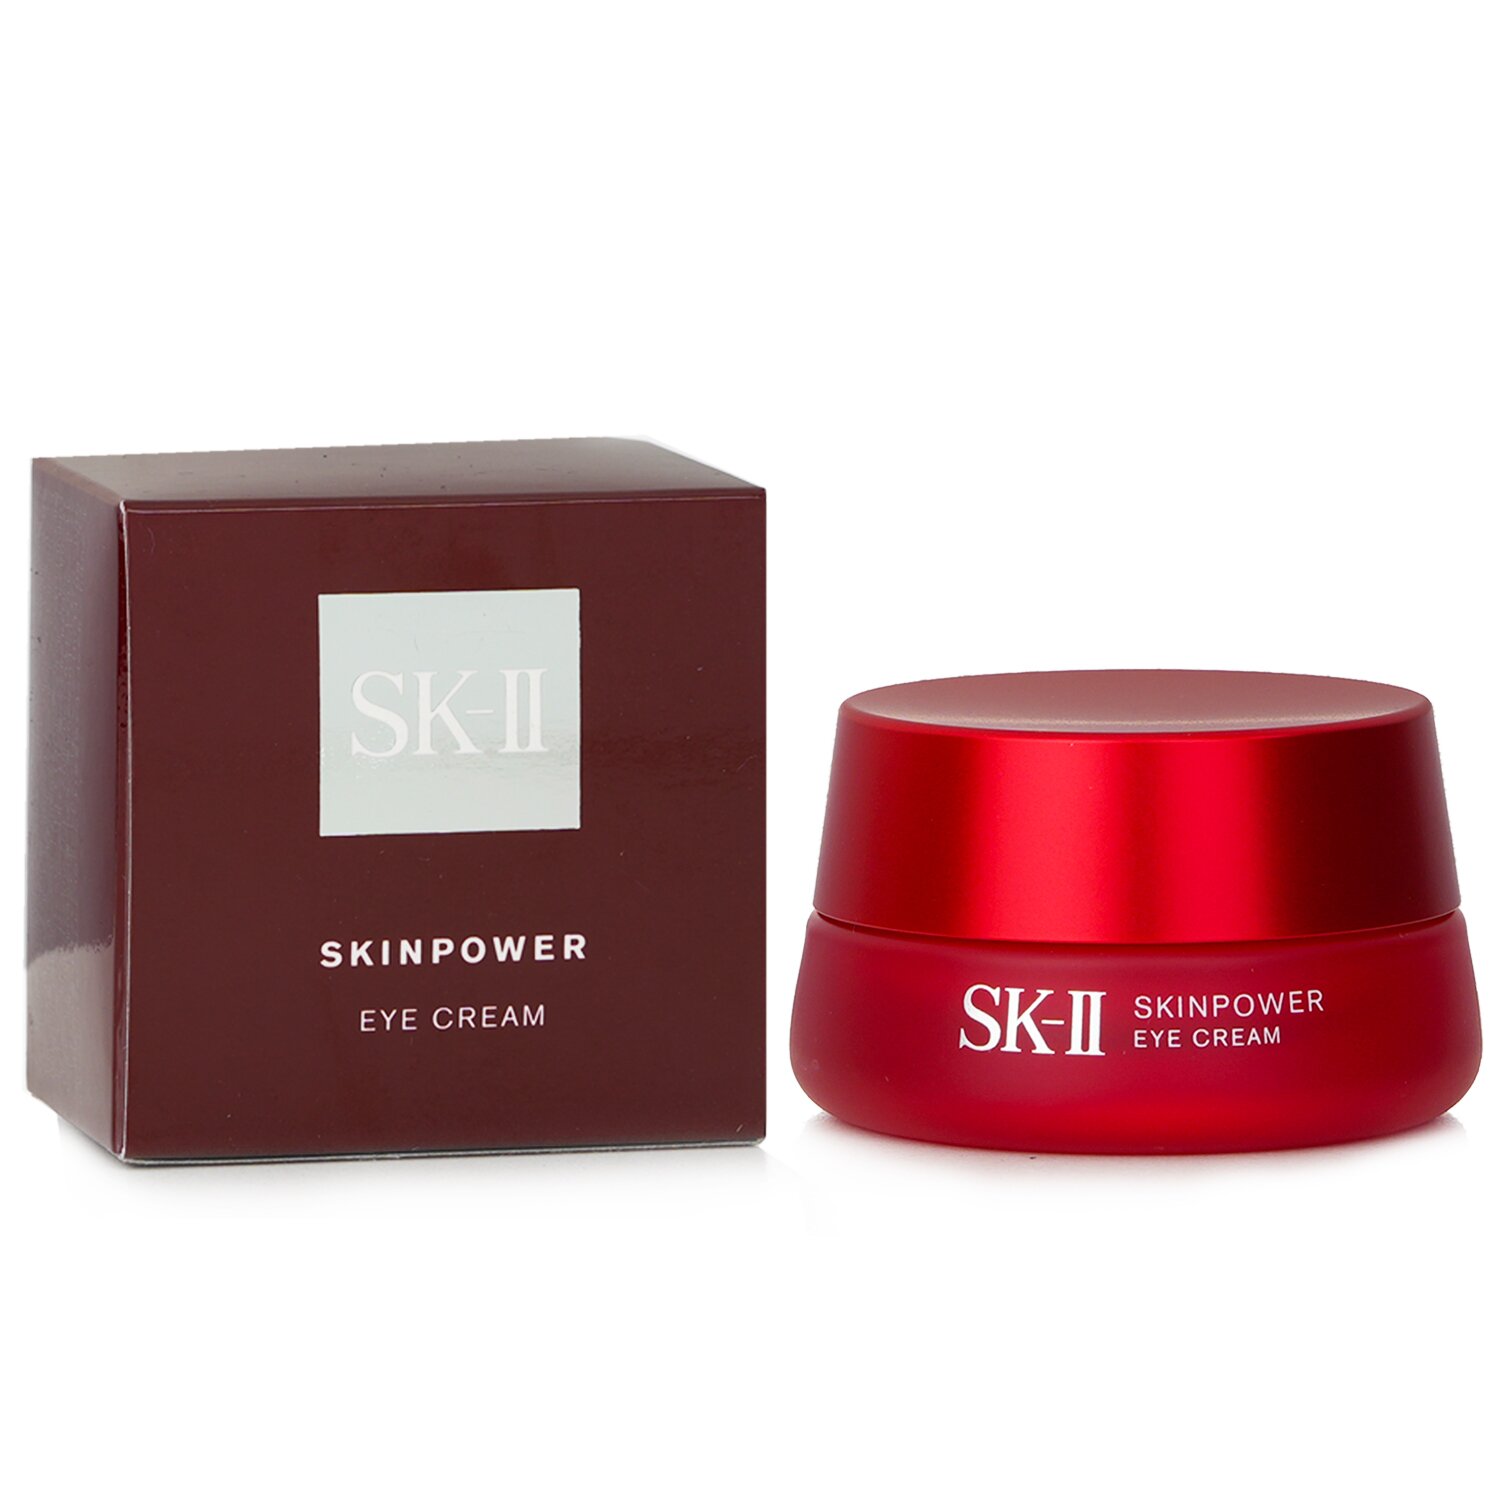 SK II Skinpower Eye Cream 15g/0.5oz